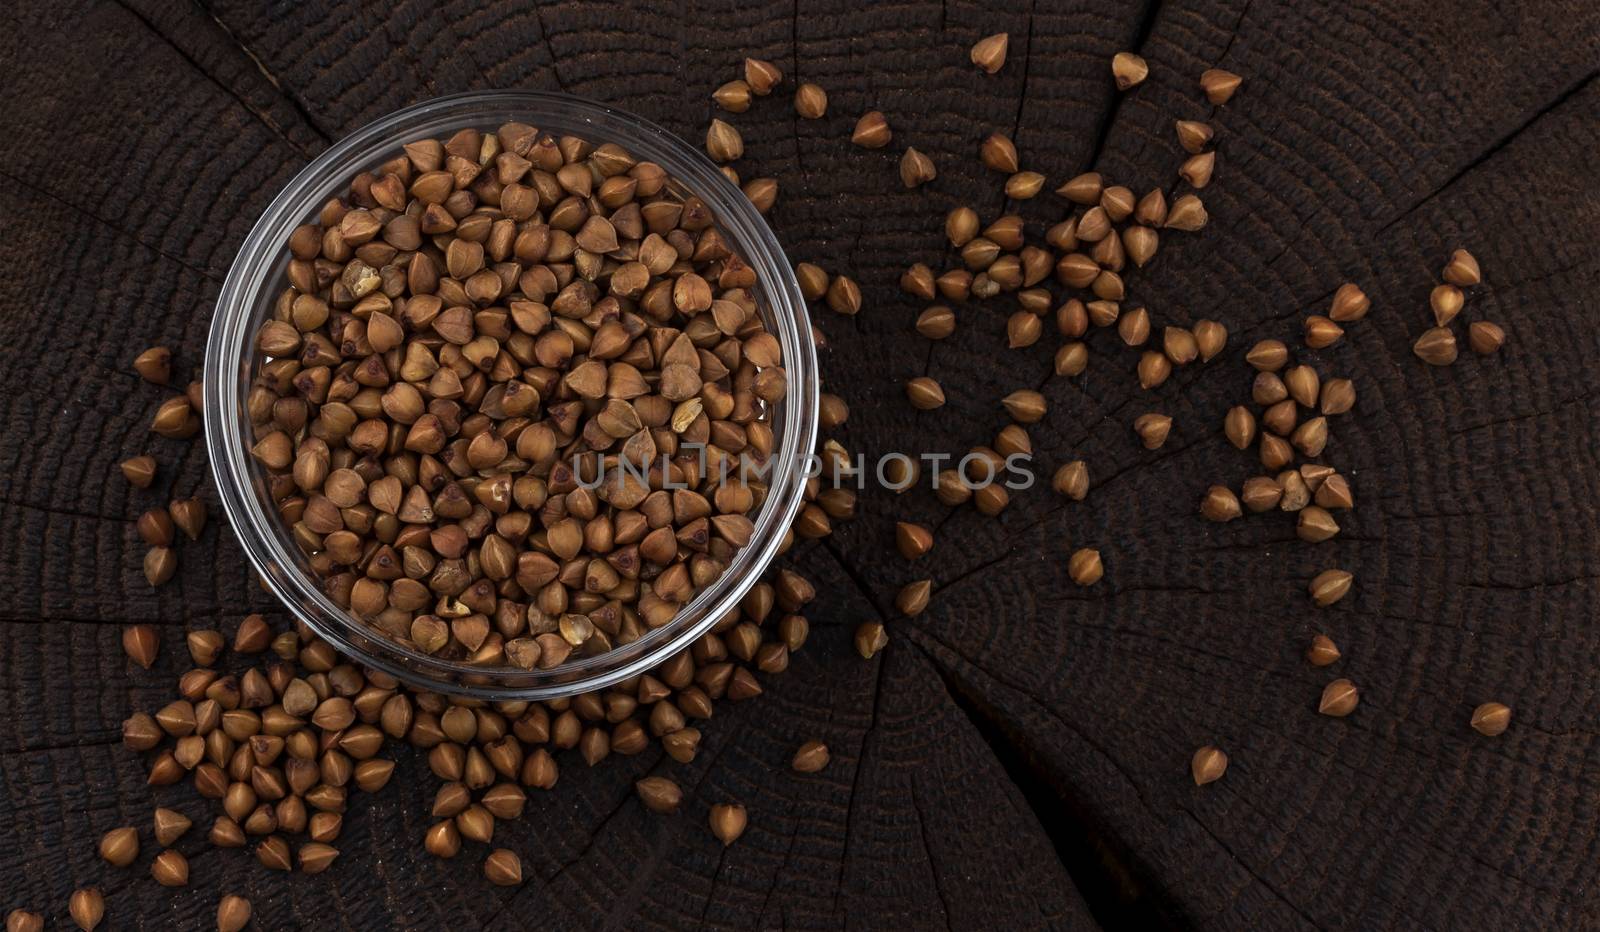 Bowl of buckwheat grains on black background. Top view by xamtiw